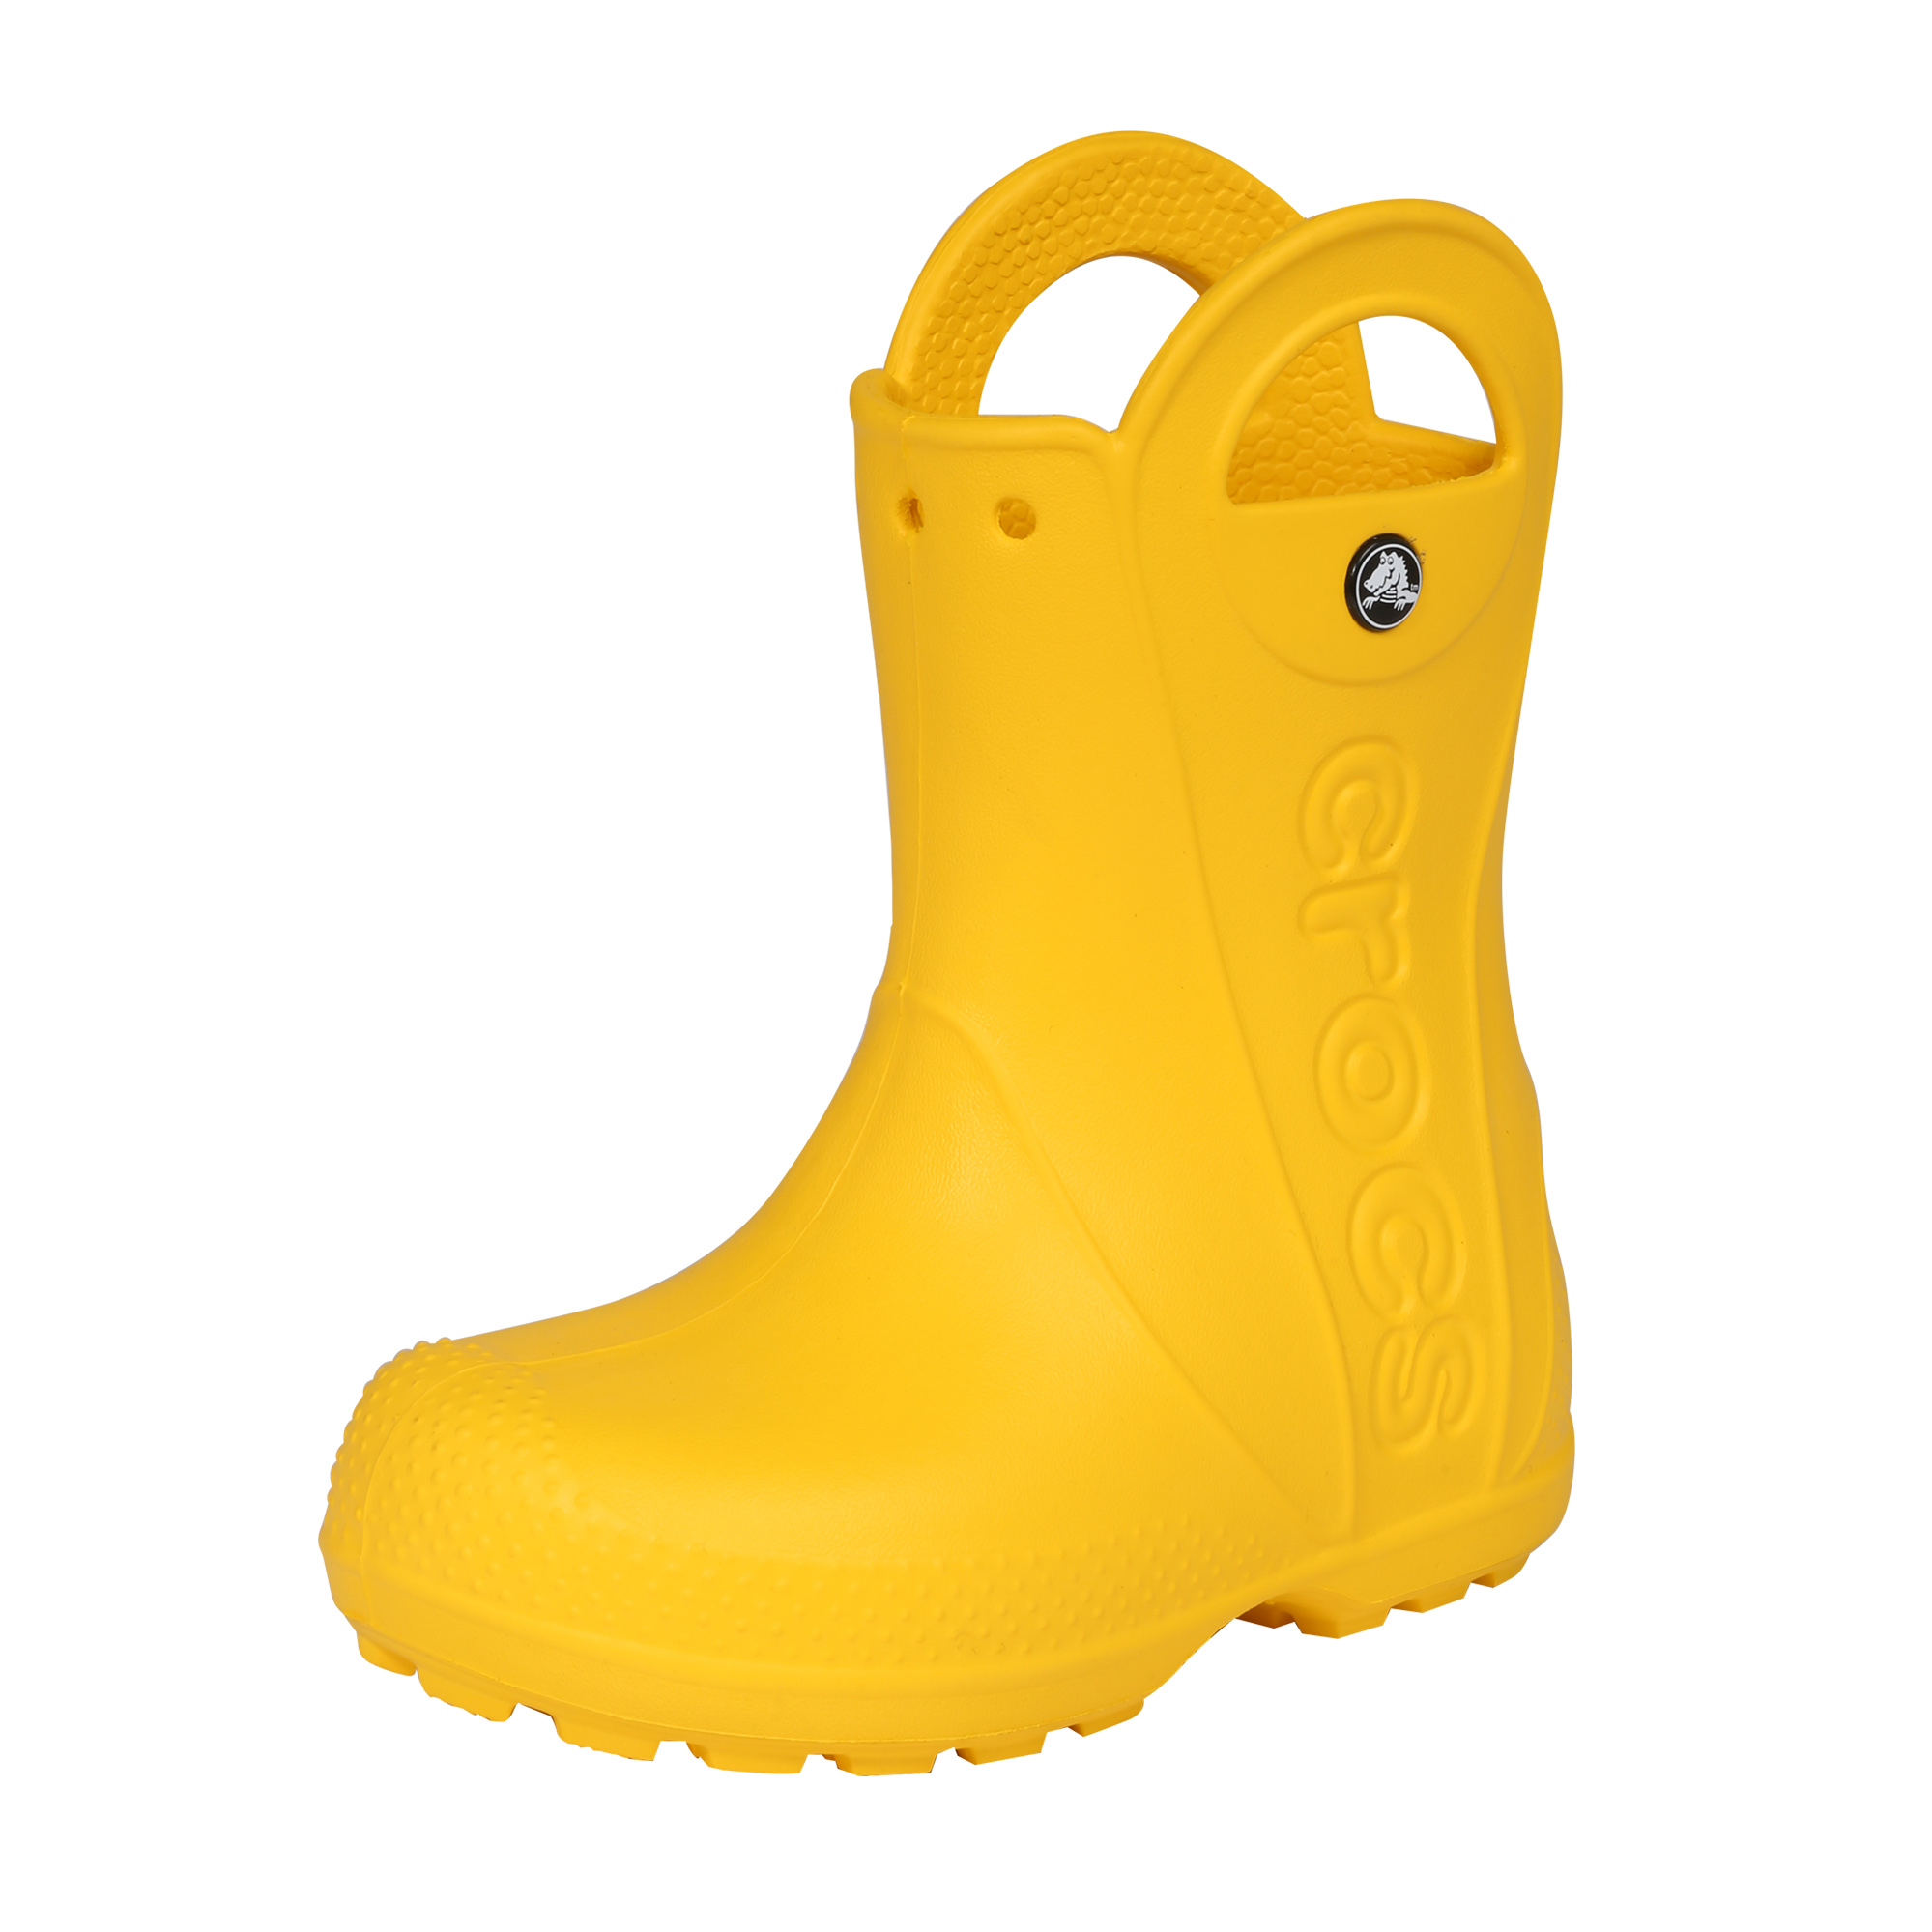 Sample Product Rain Shoes